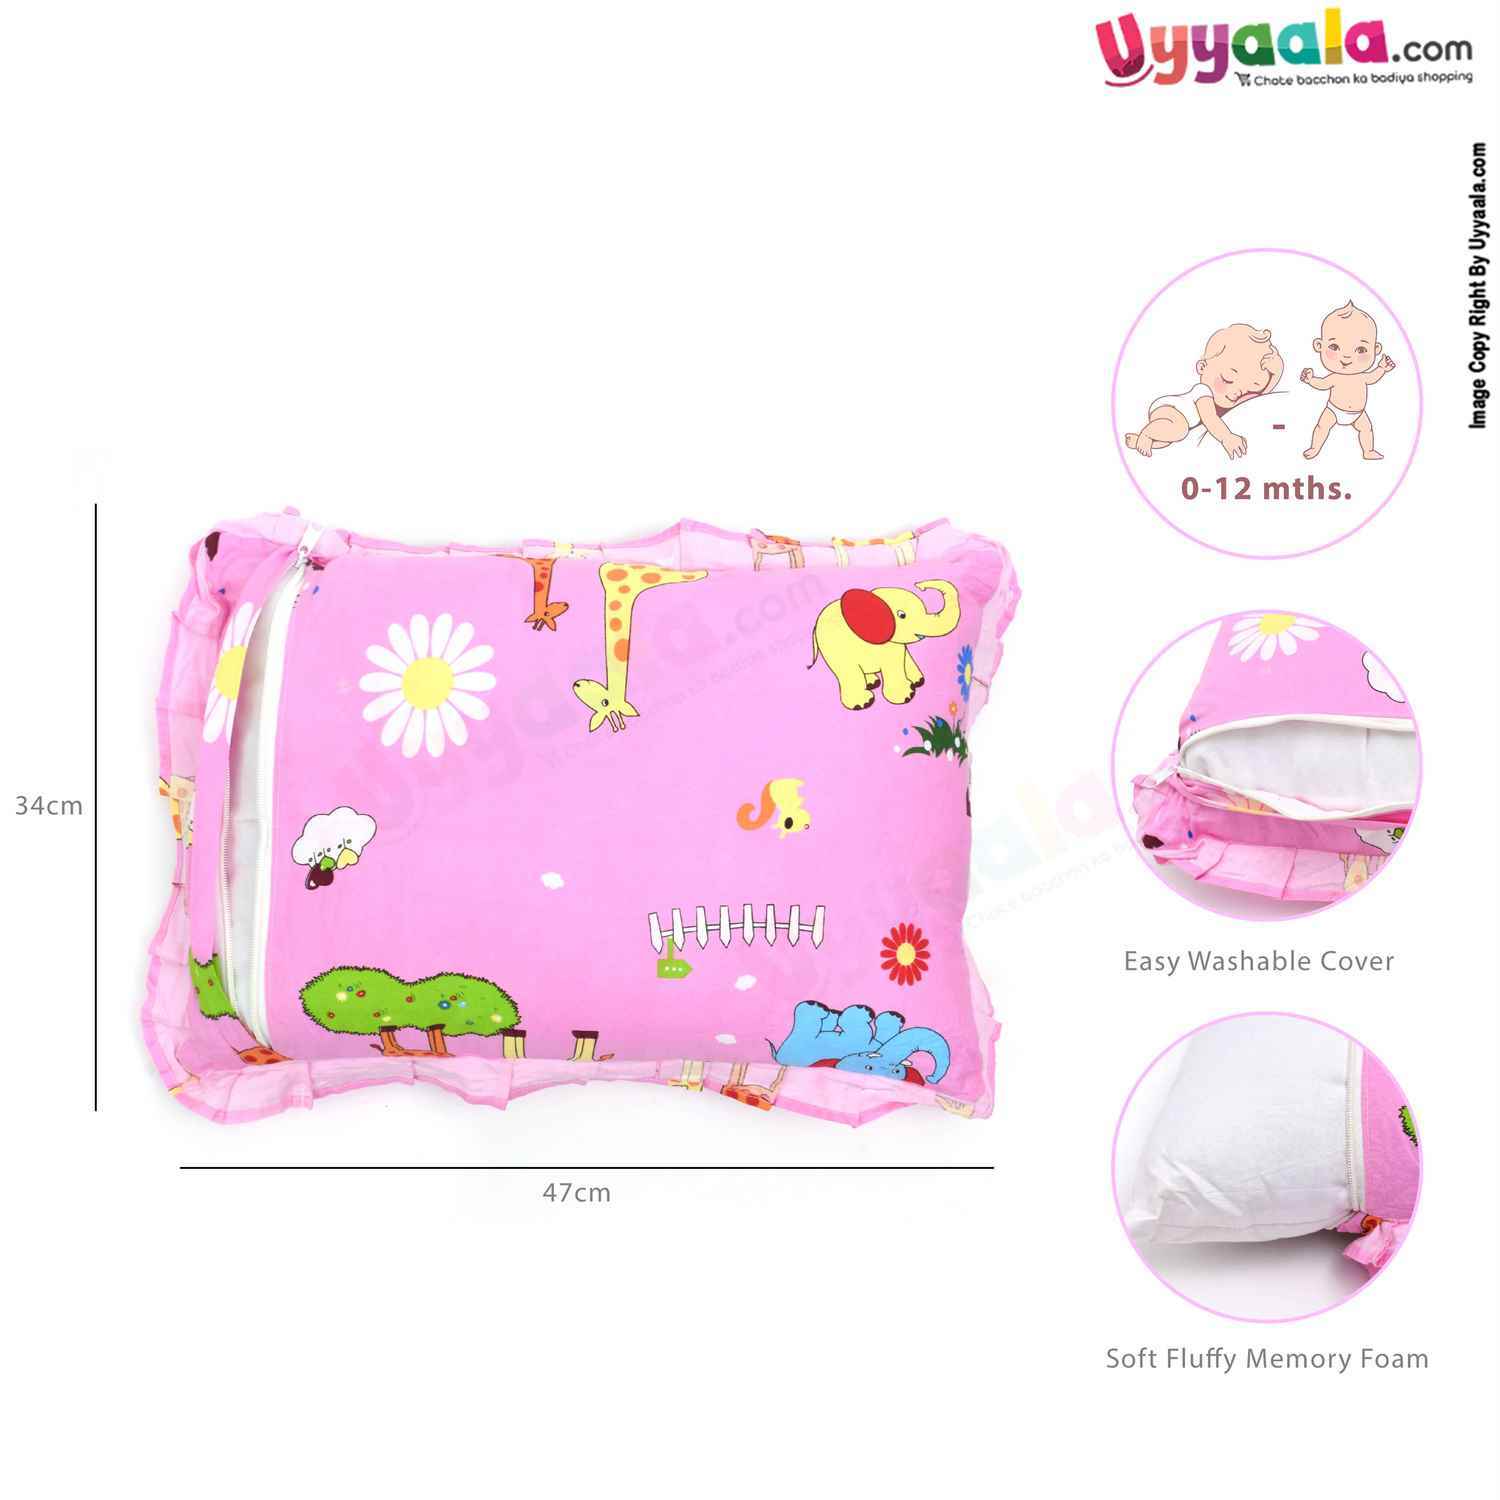 uyyala - Pillow for babies